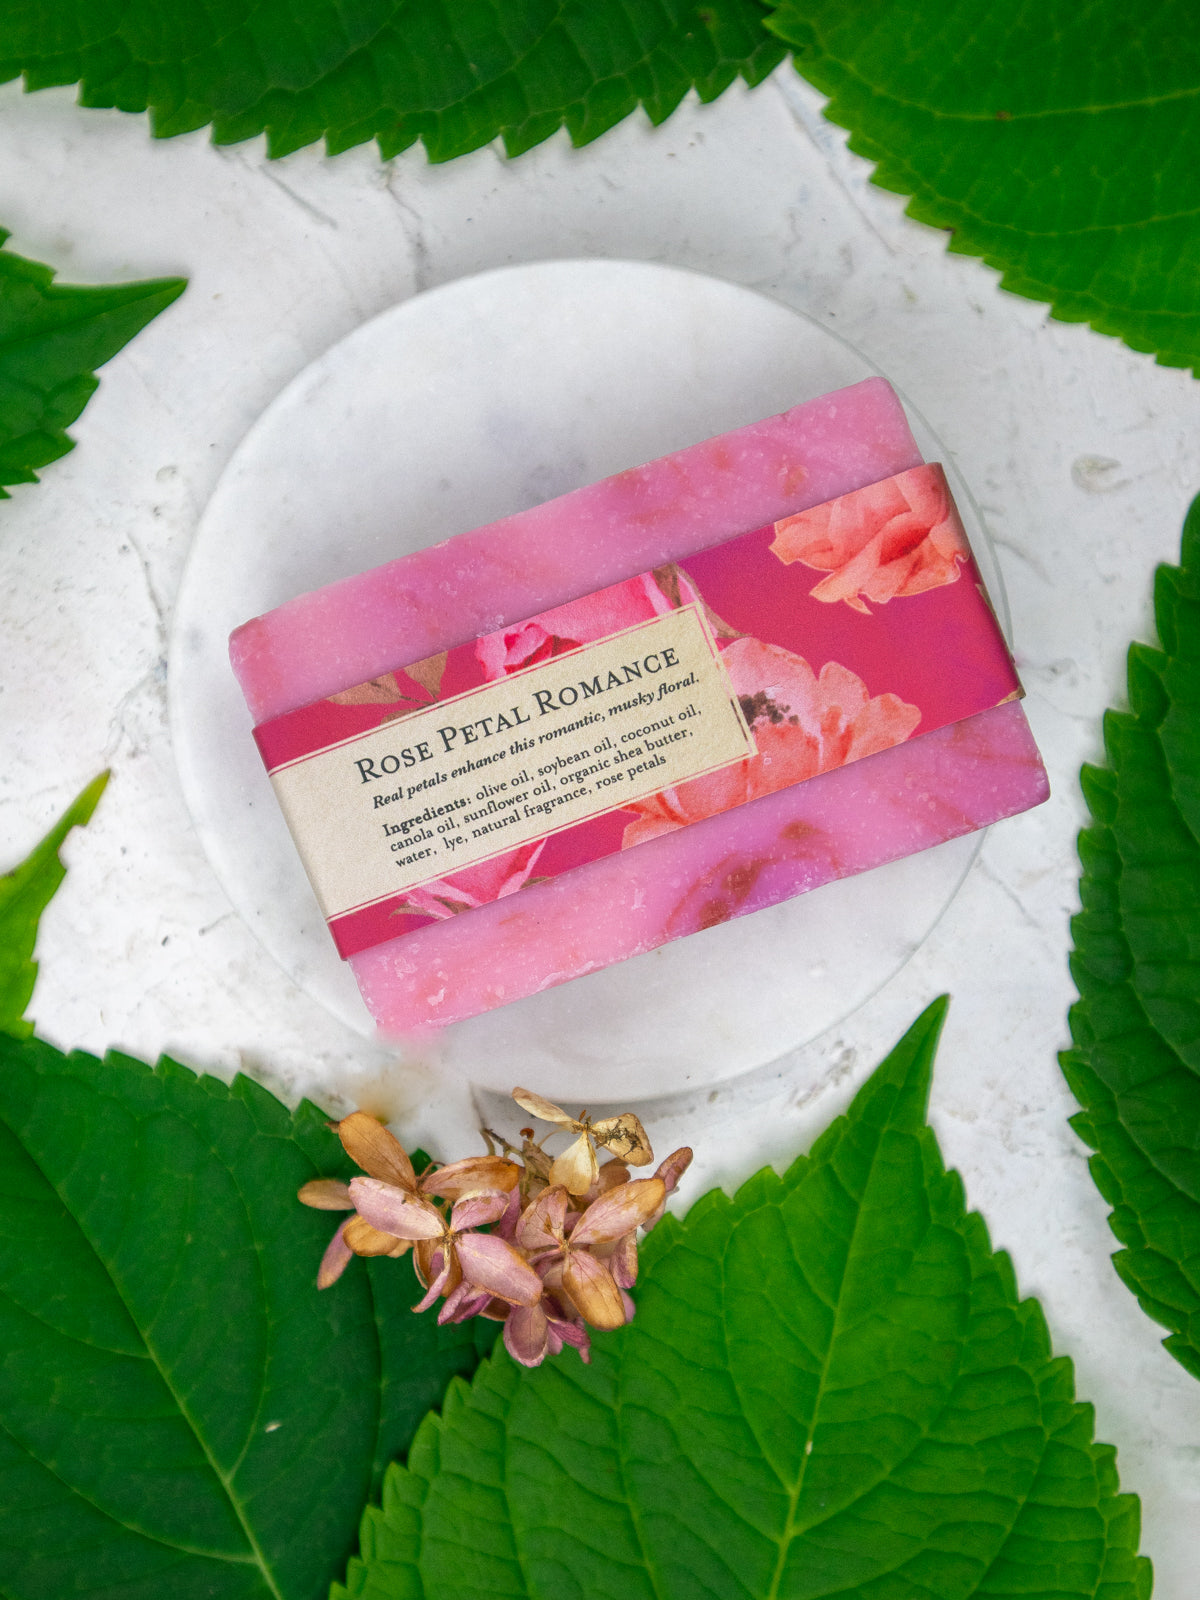 Rose Petal Romance Soap Bar by Ash & Rose